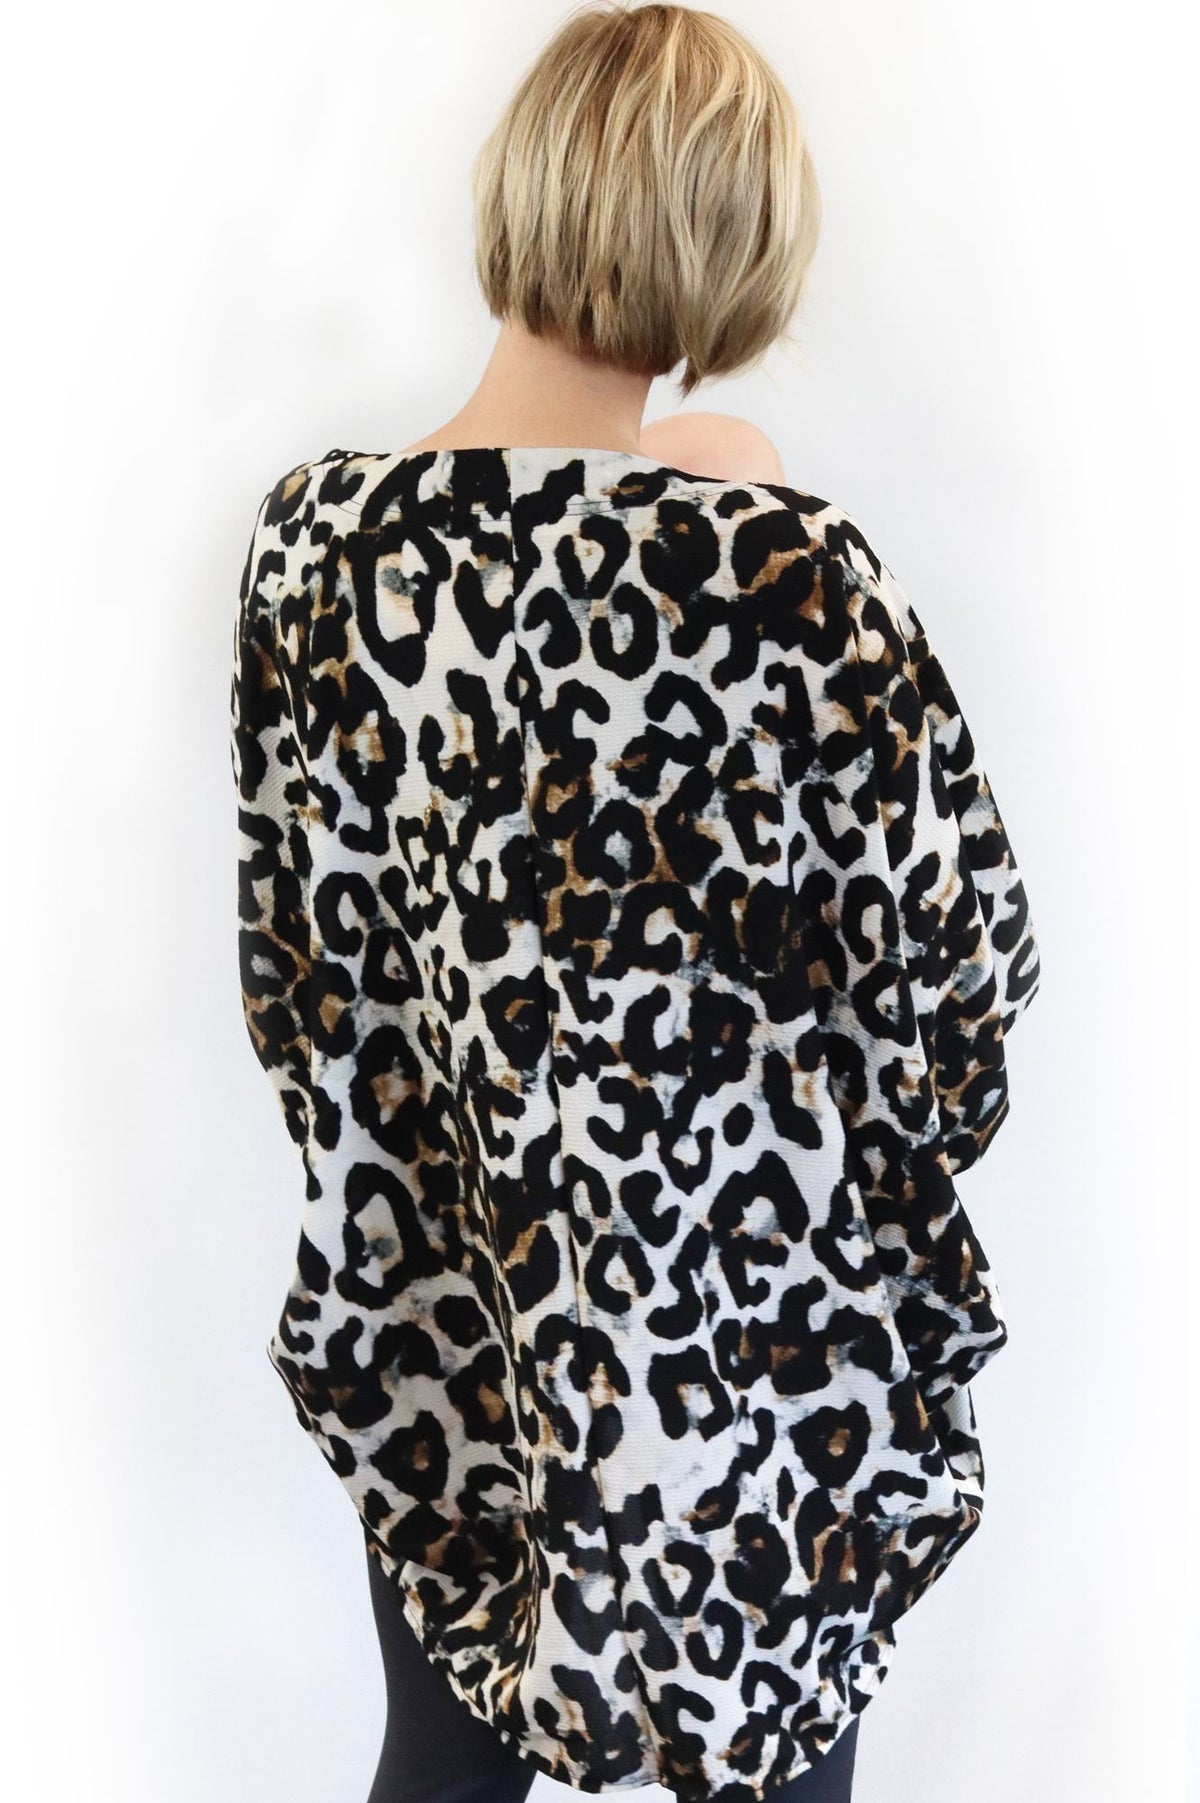 Nursing Cover-Up - Leopard Print